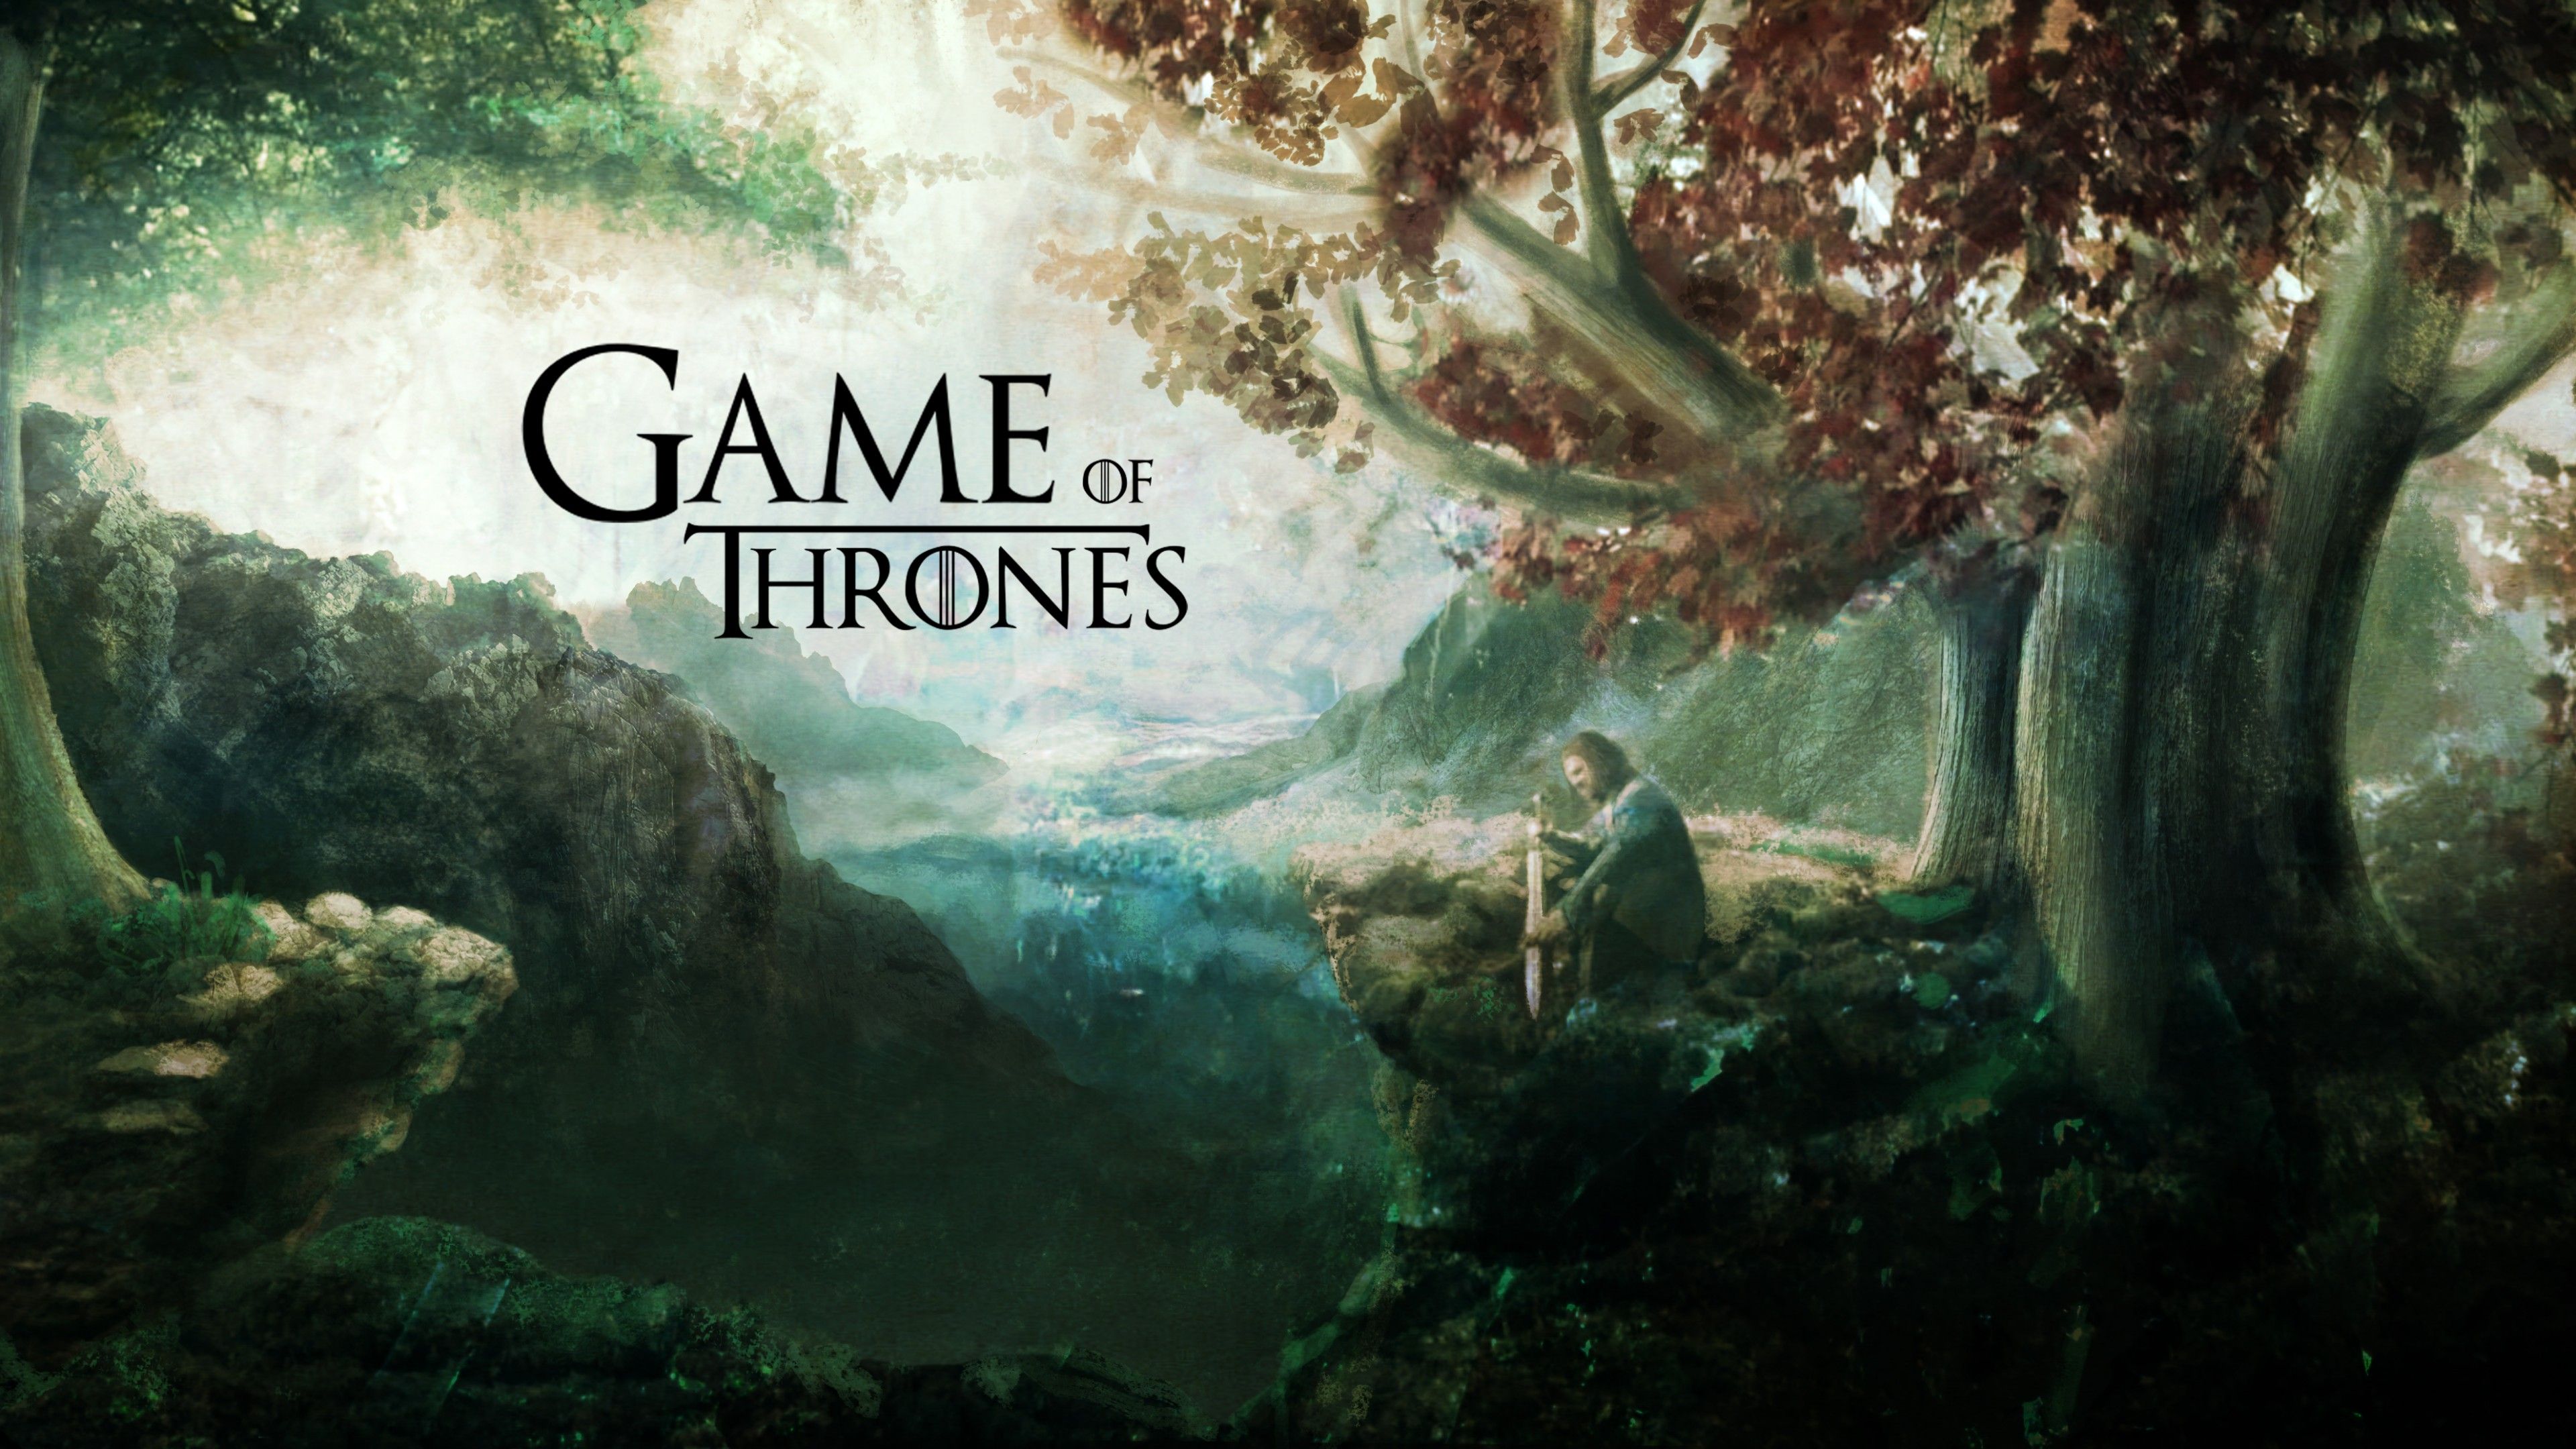 Wallpaper Game of Thrones, HD, 4K, TV Series,. Wallpaper